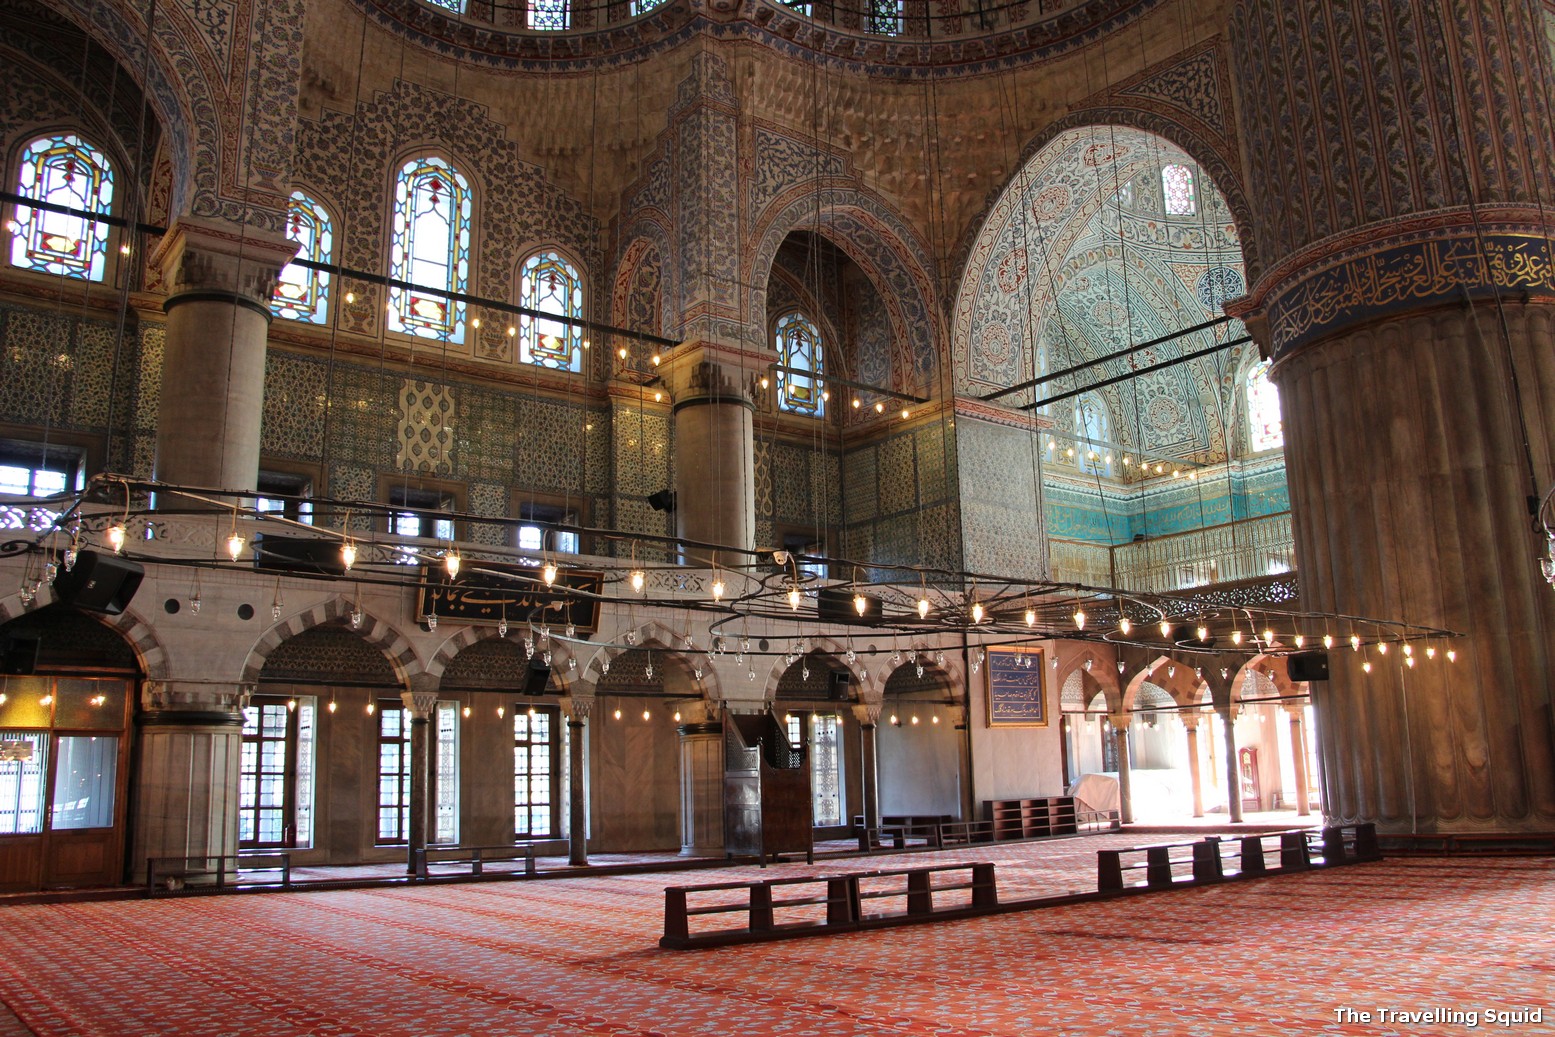 turkey istanbul blue mosque